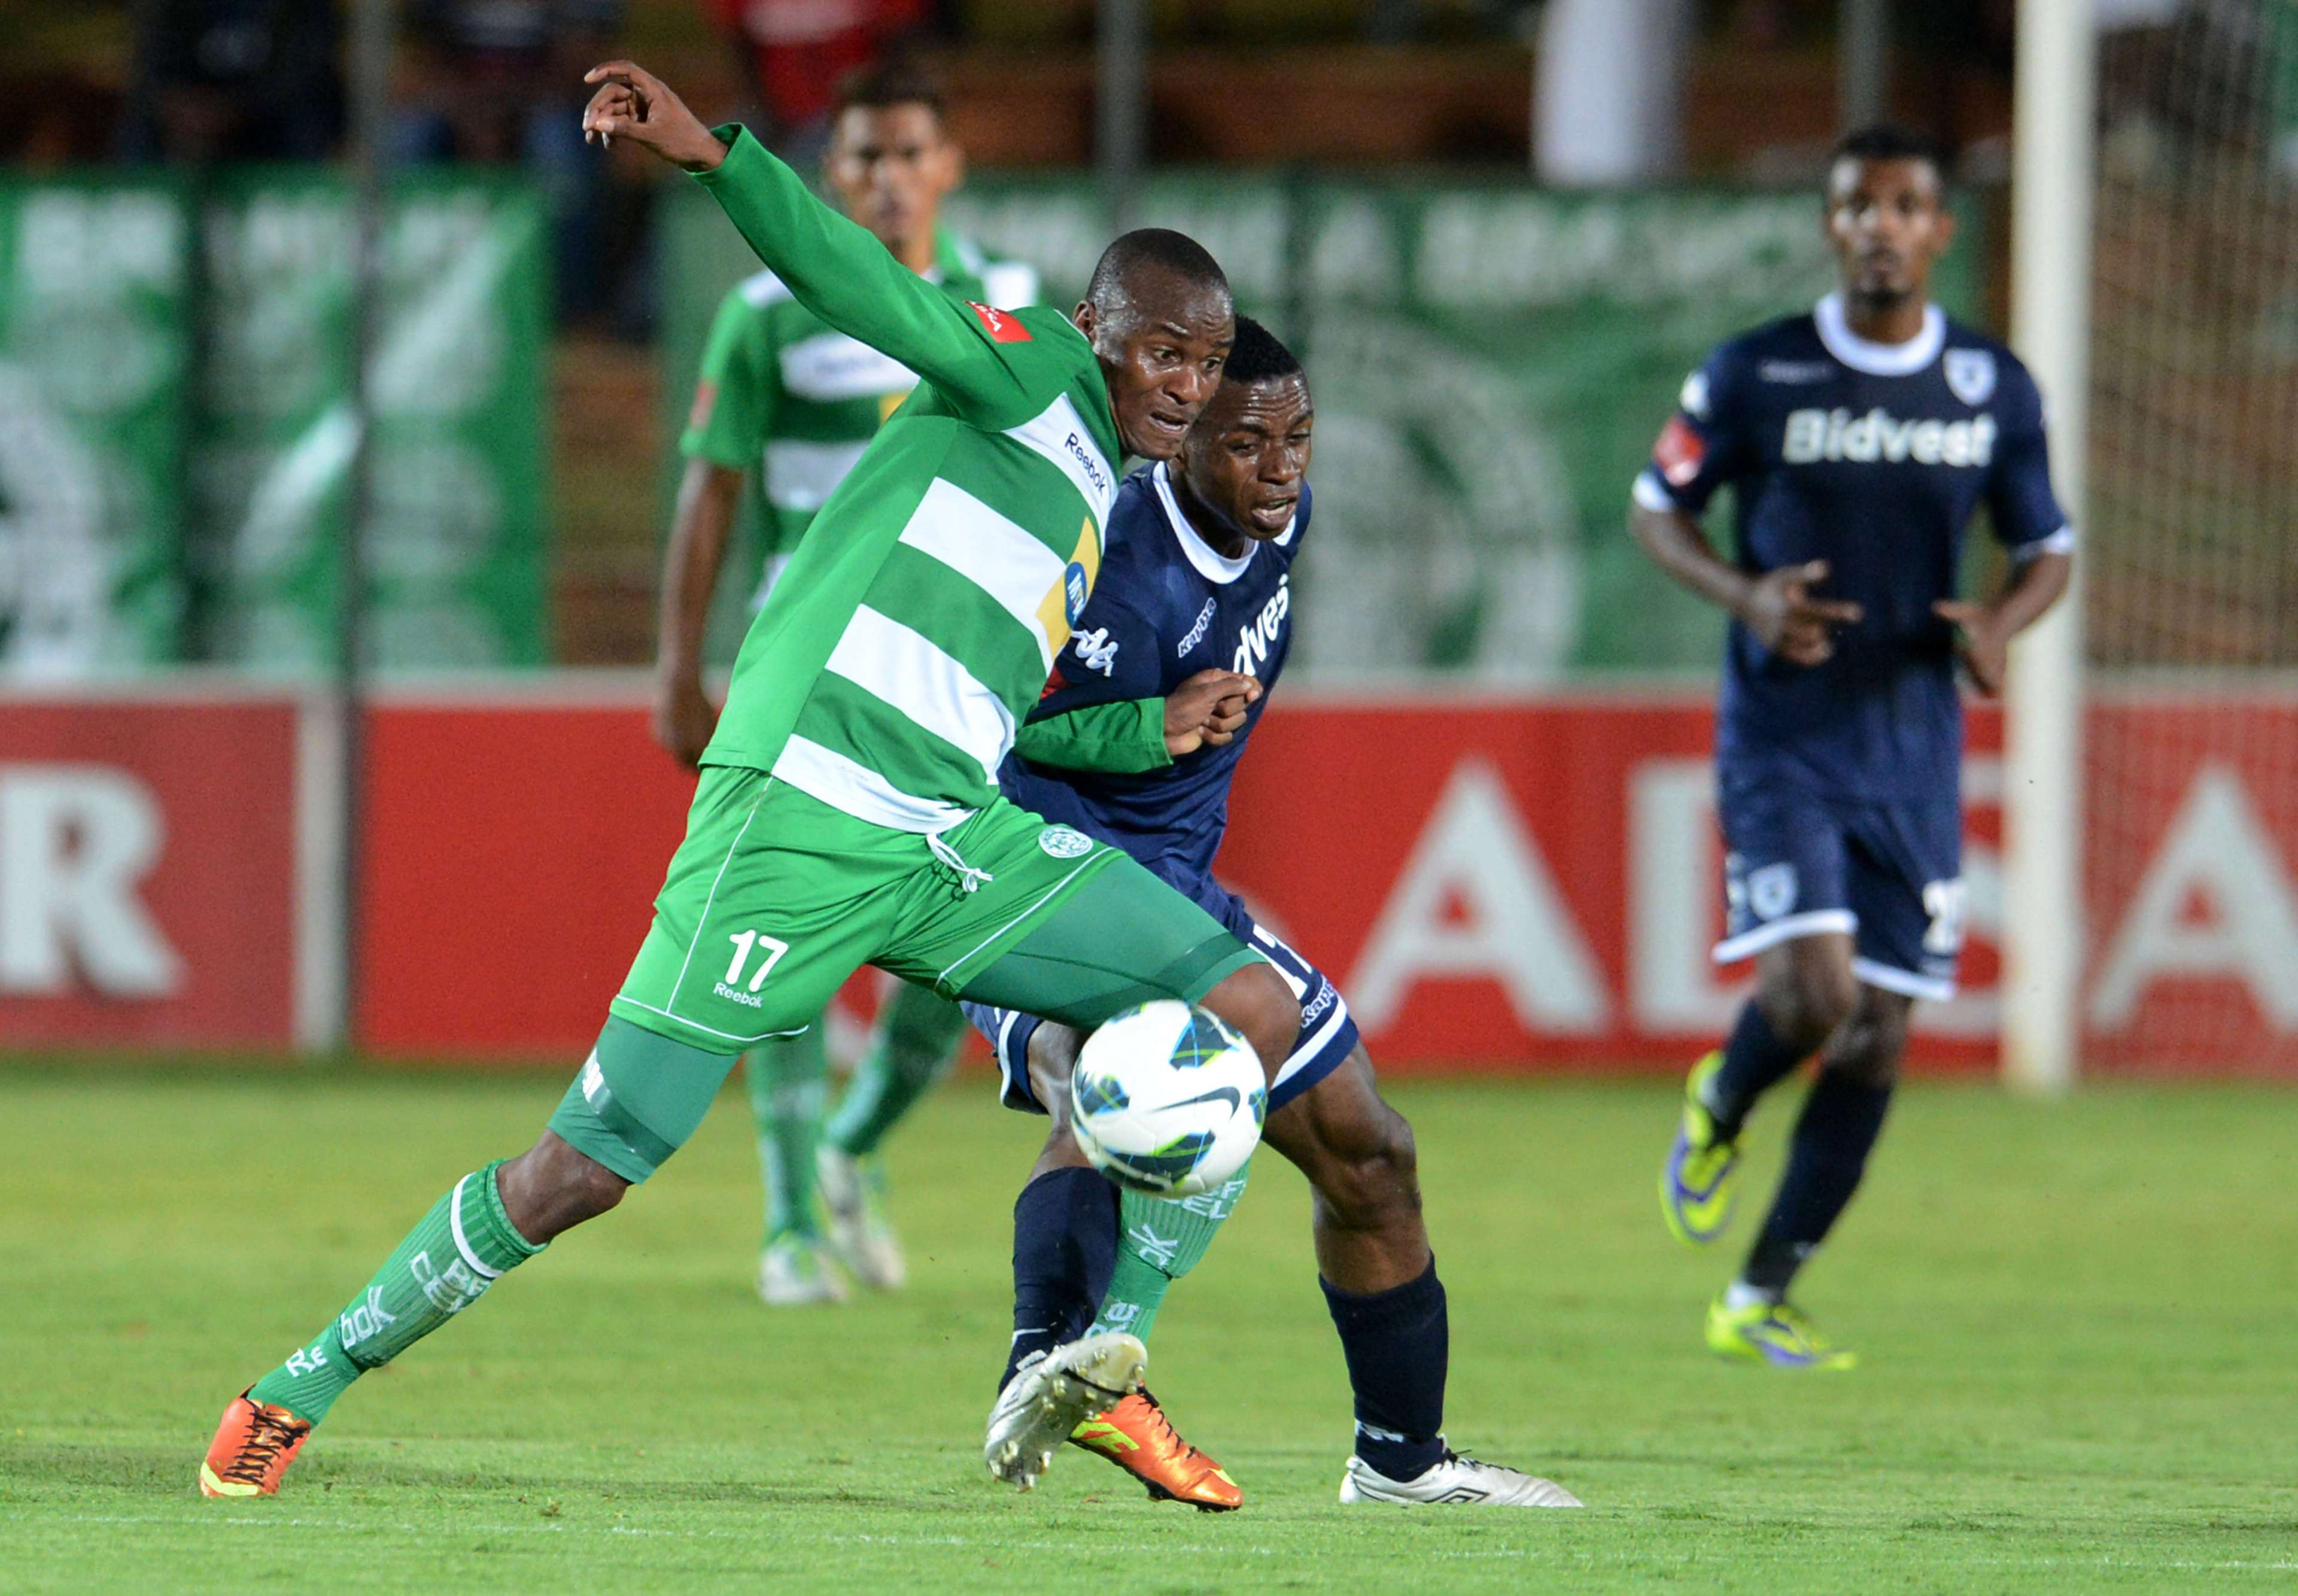 Bloemfontein Celtic attacker Joel Mogorosi